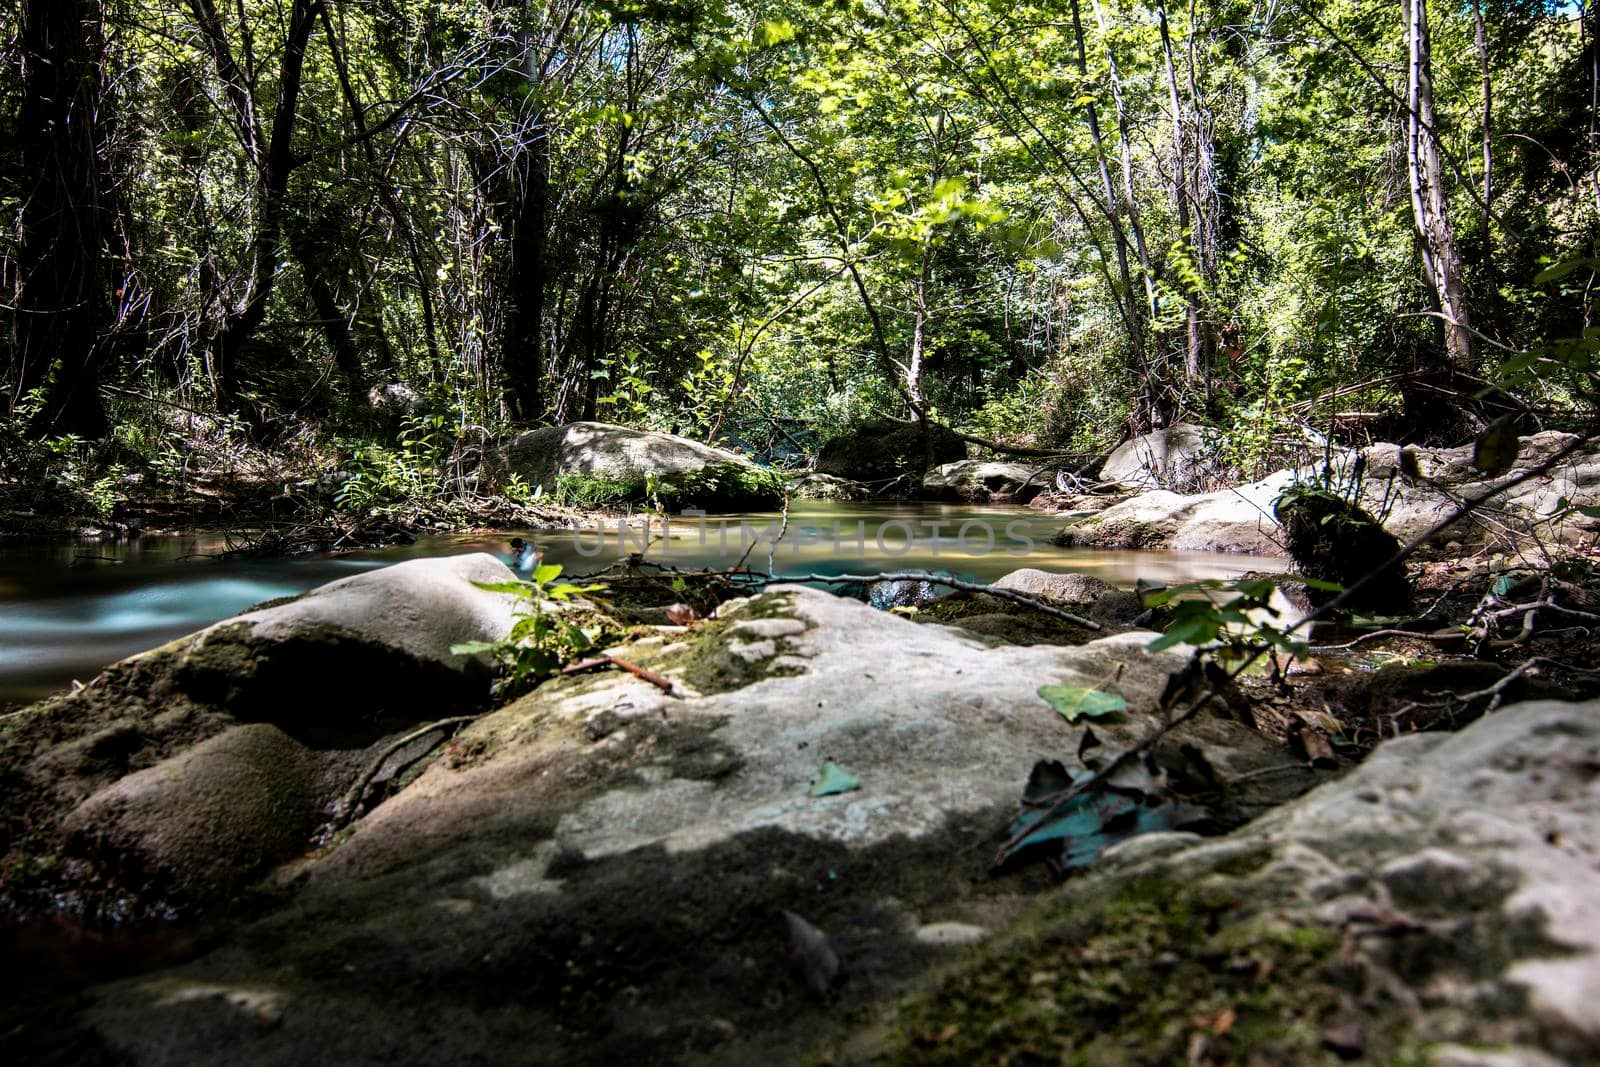 Wild rocky river in the forest long exposure picture in Riells del Fai in Catalonia